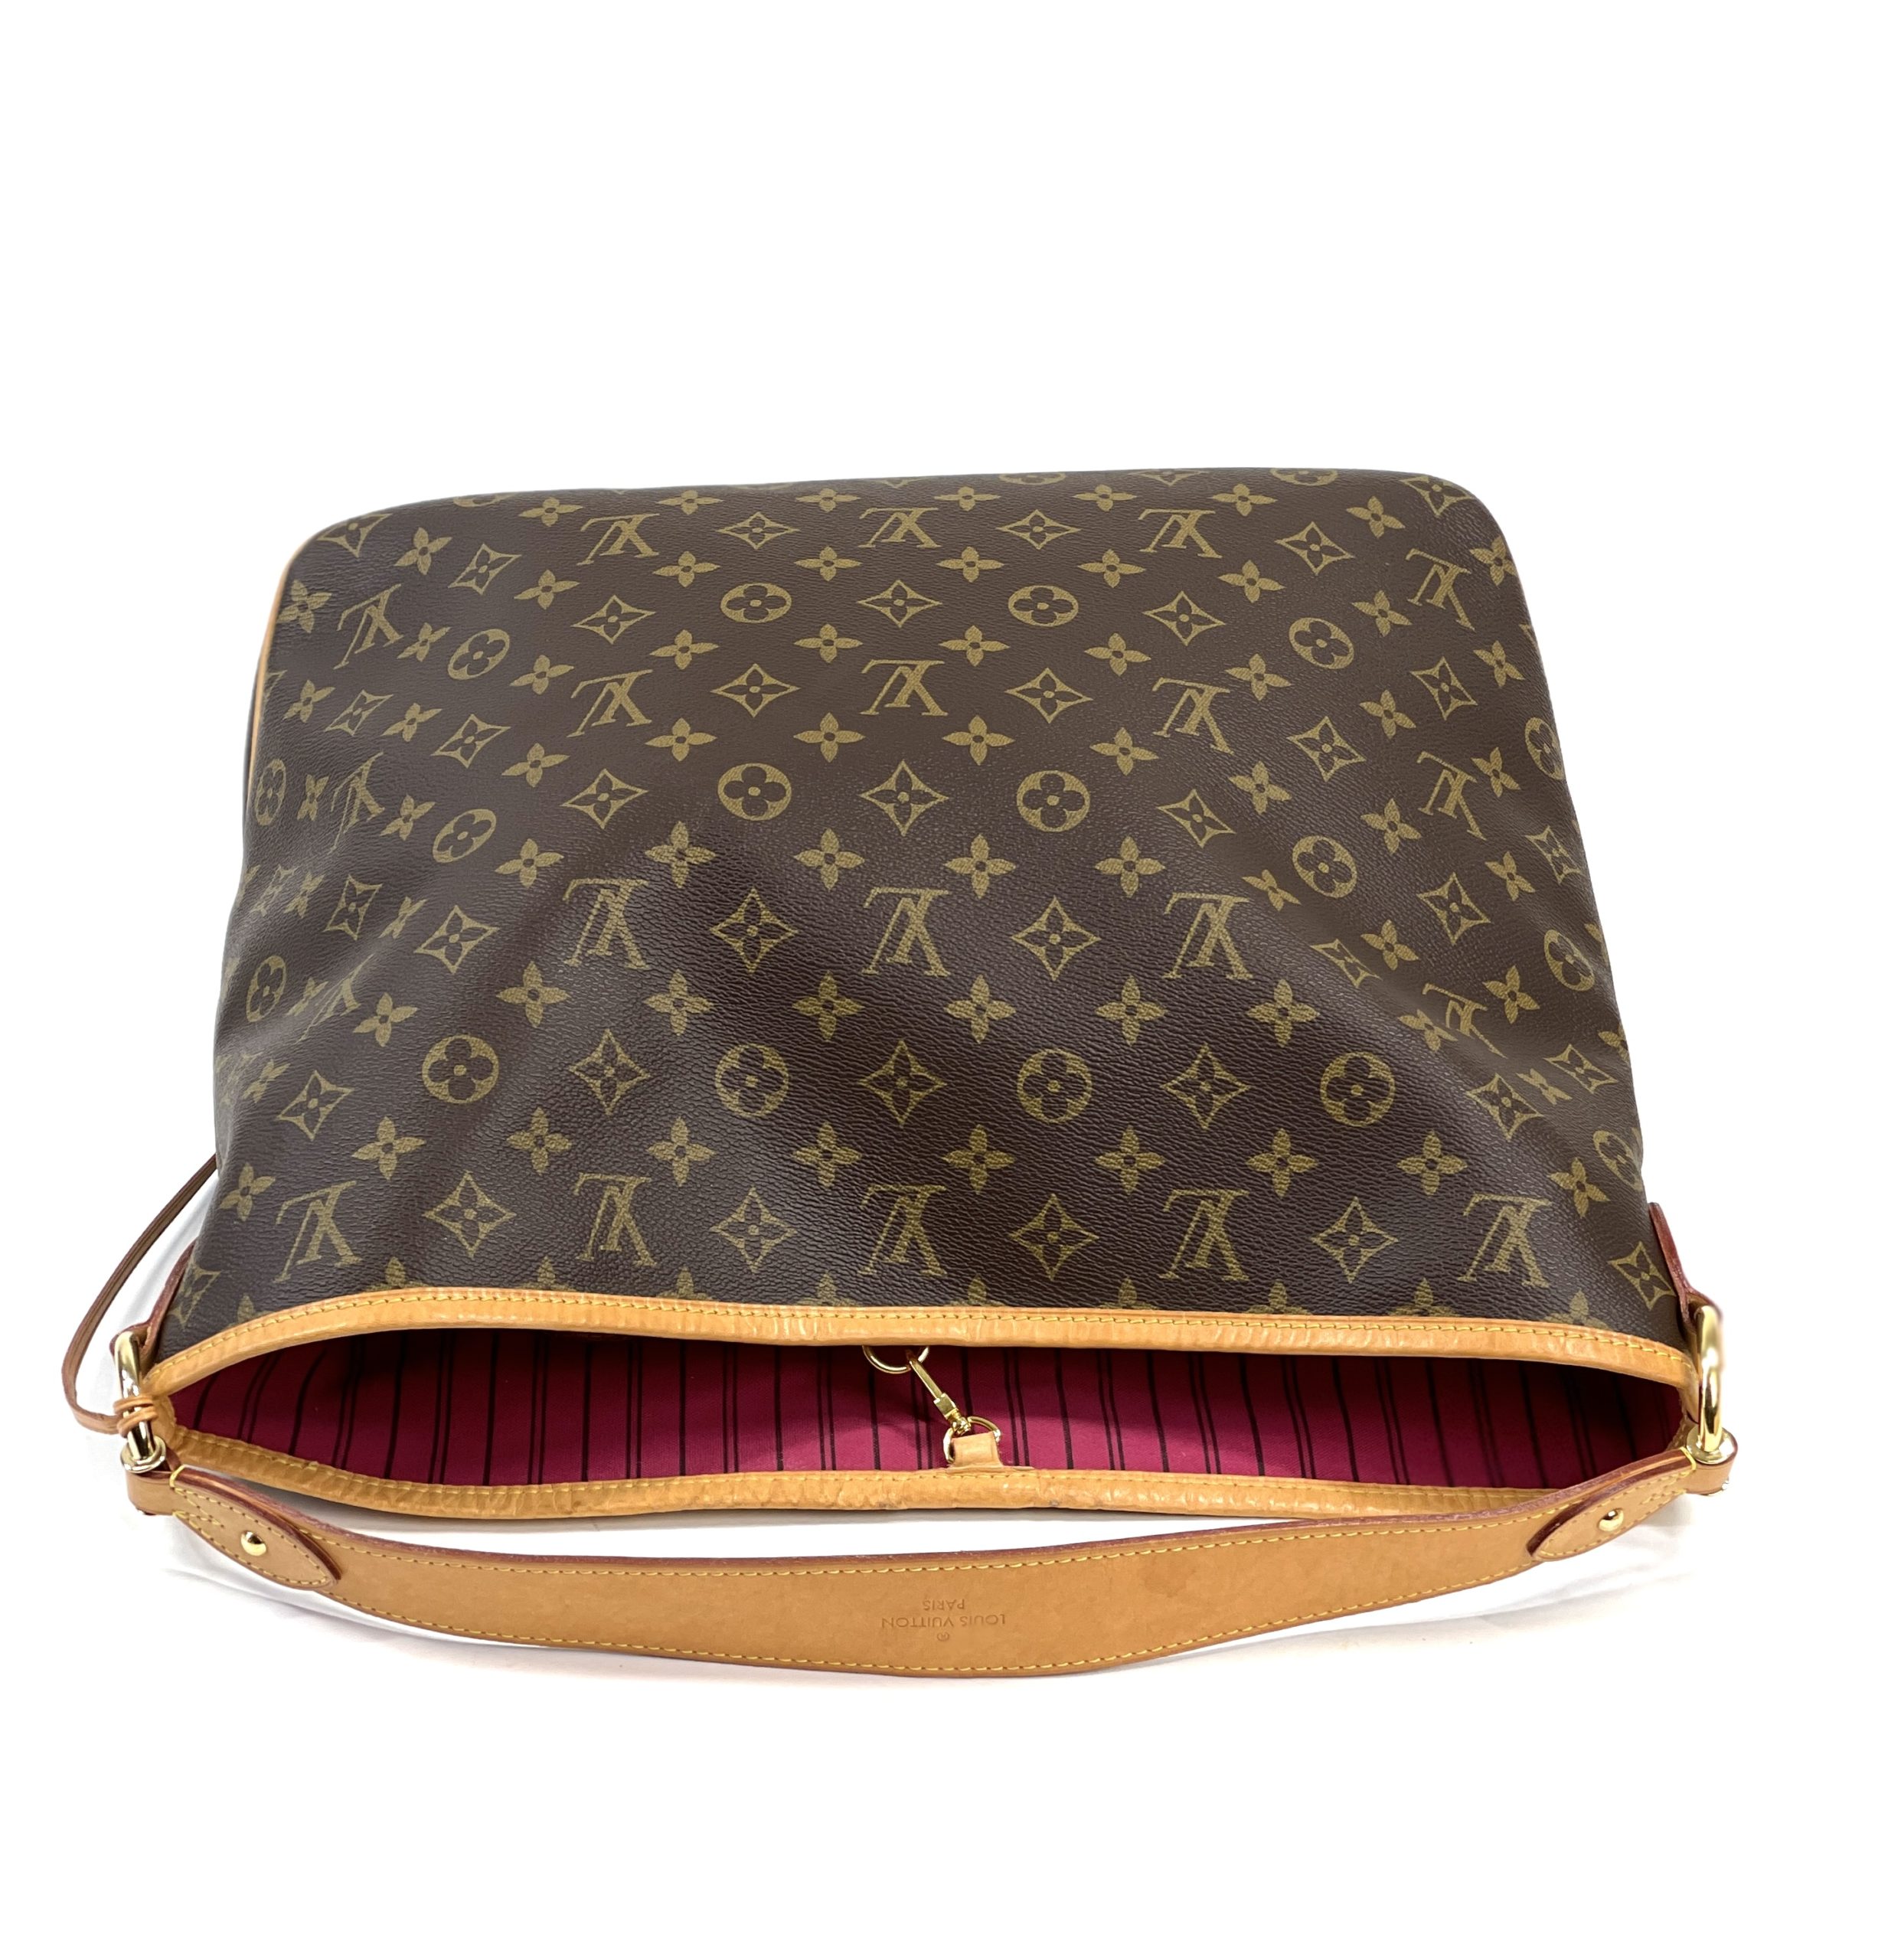 Vintage Louis Vuitton Delightful MM Handbag